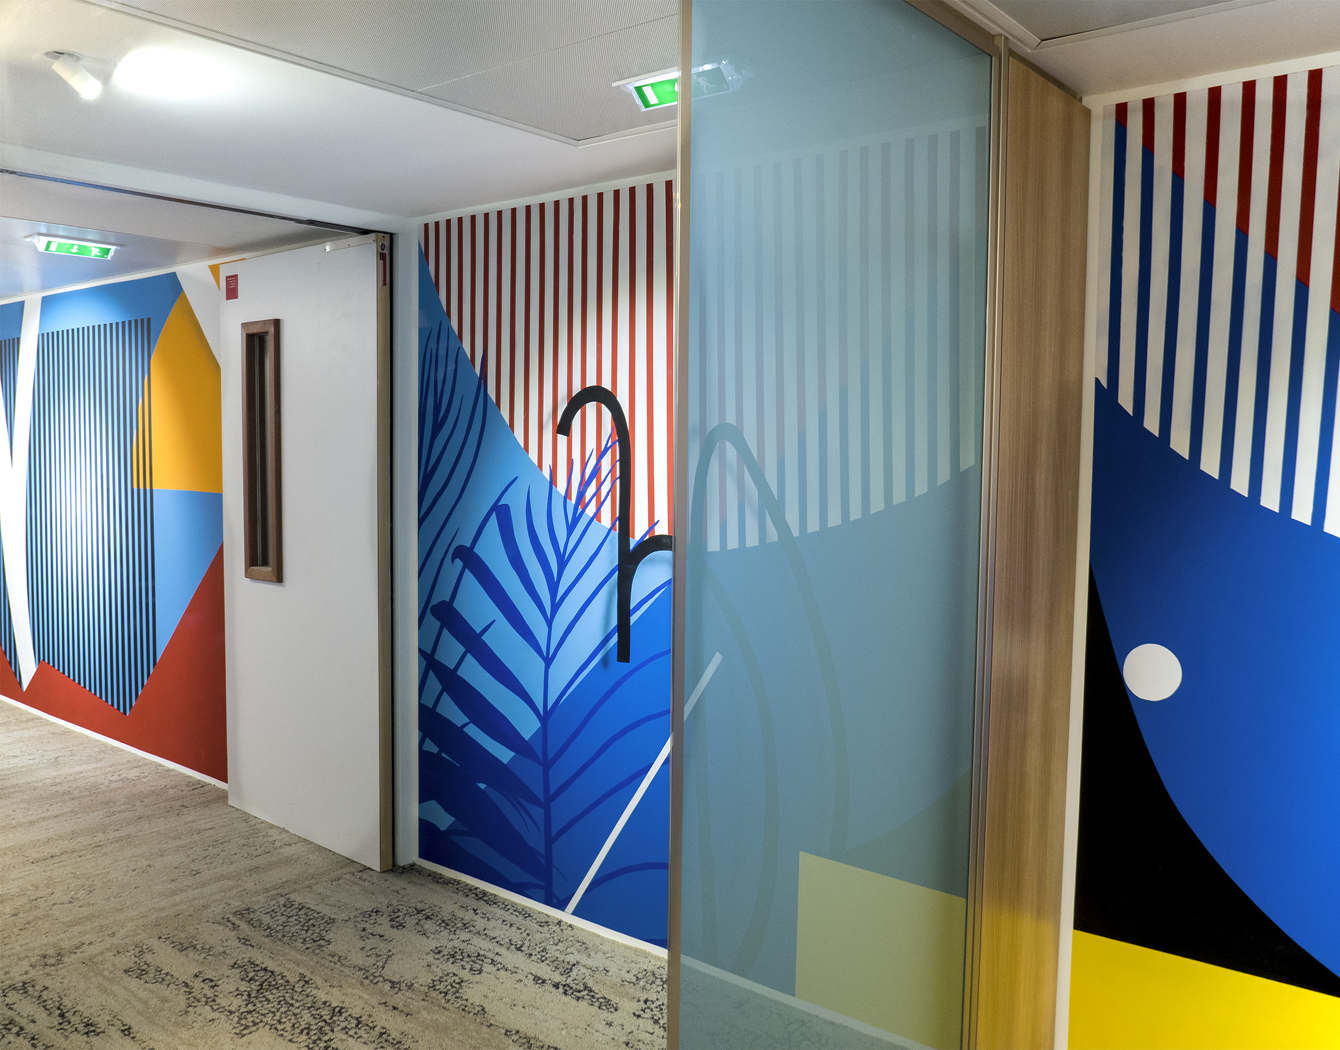 Wall of 30m long in Sopra Steria office - Paris